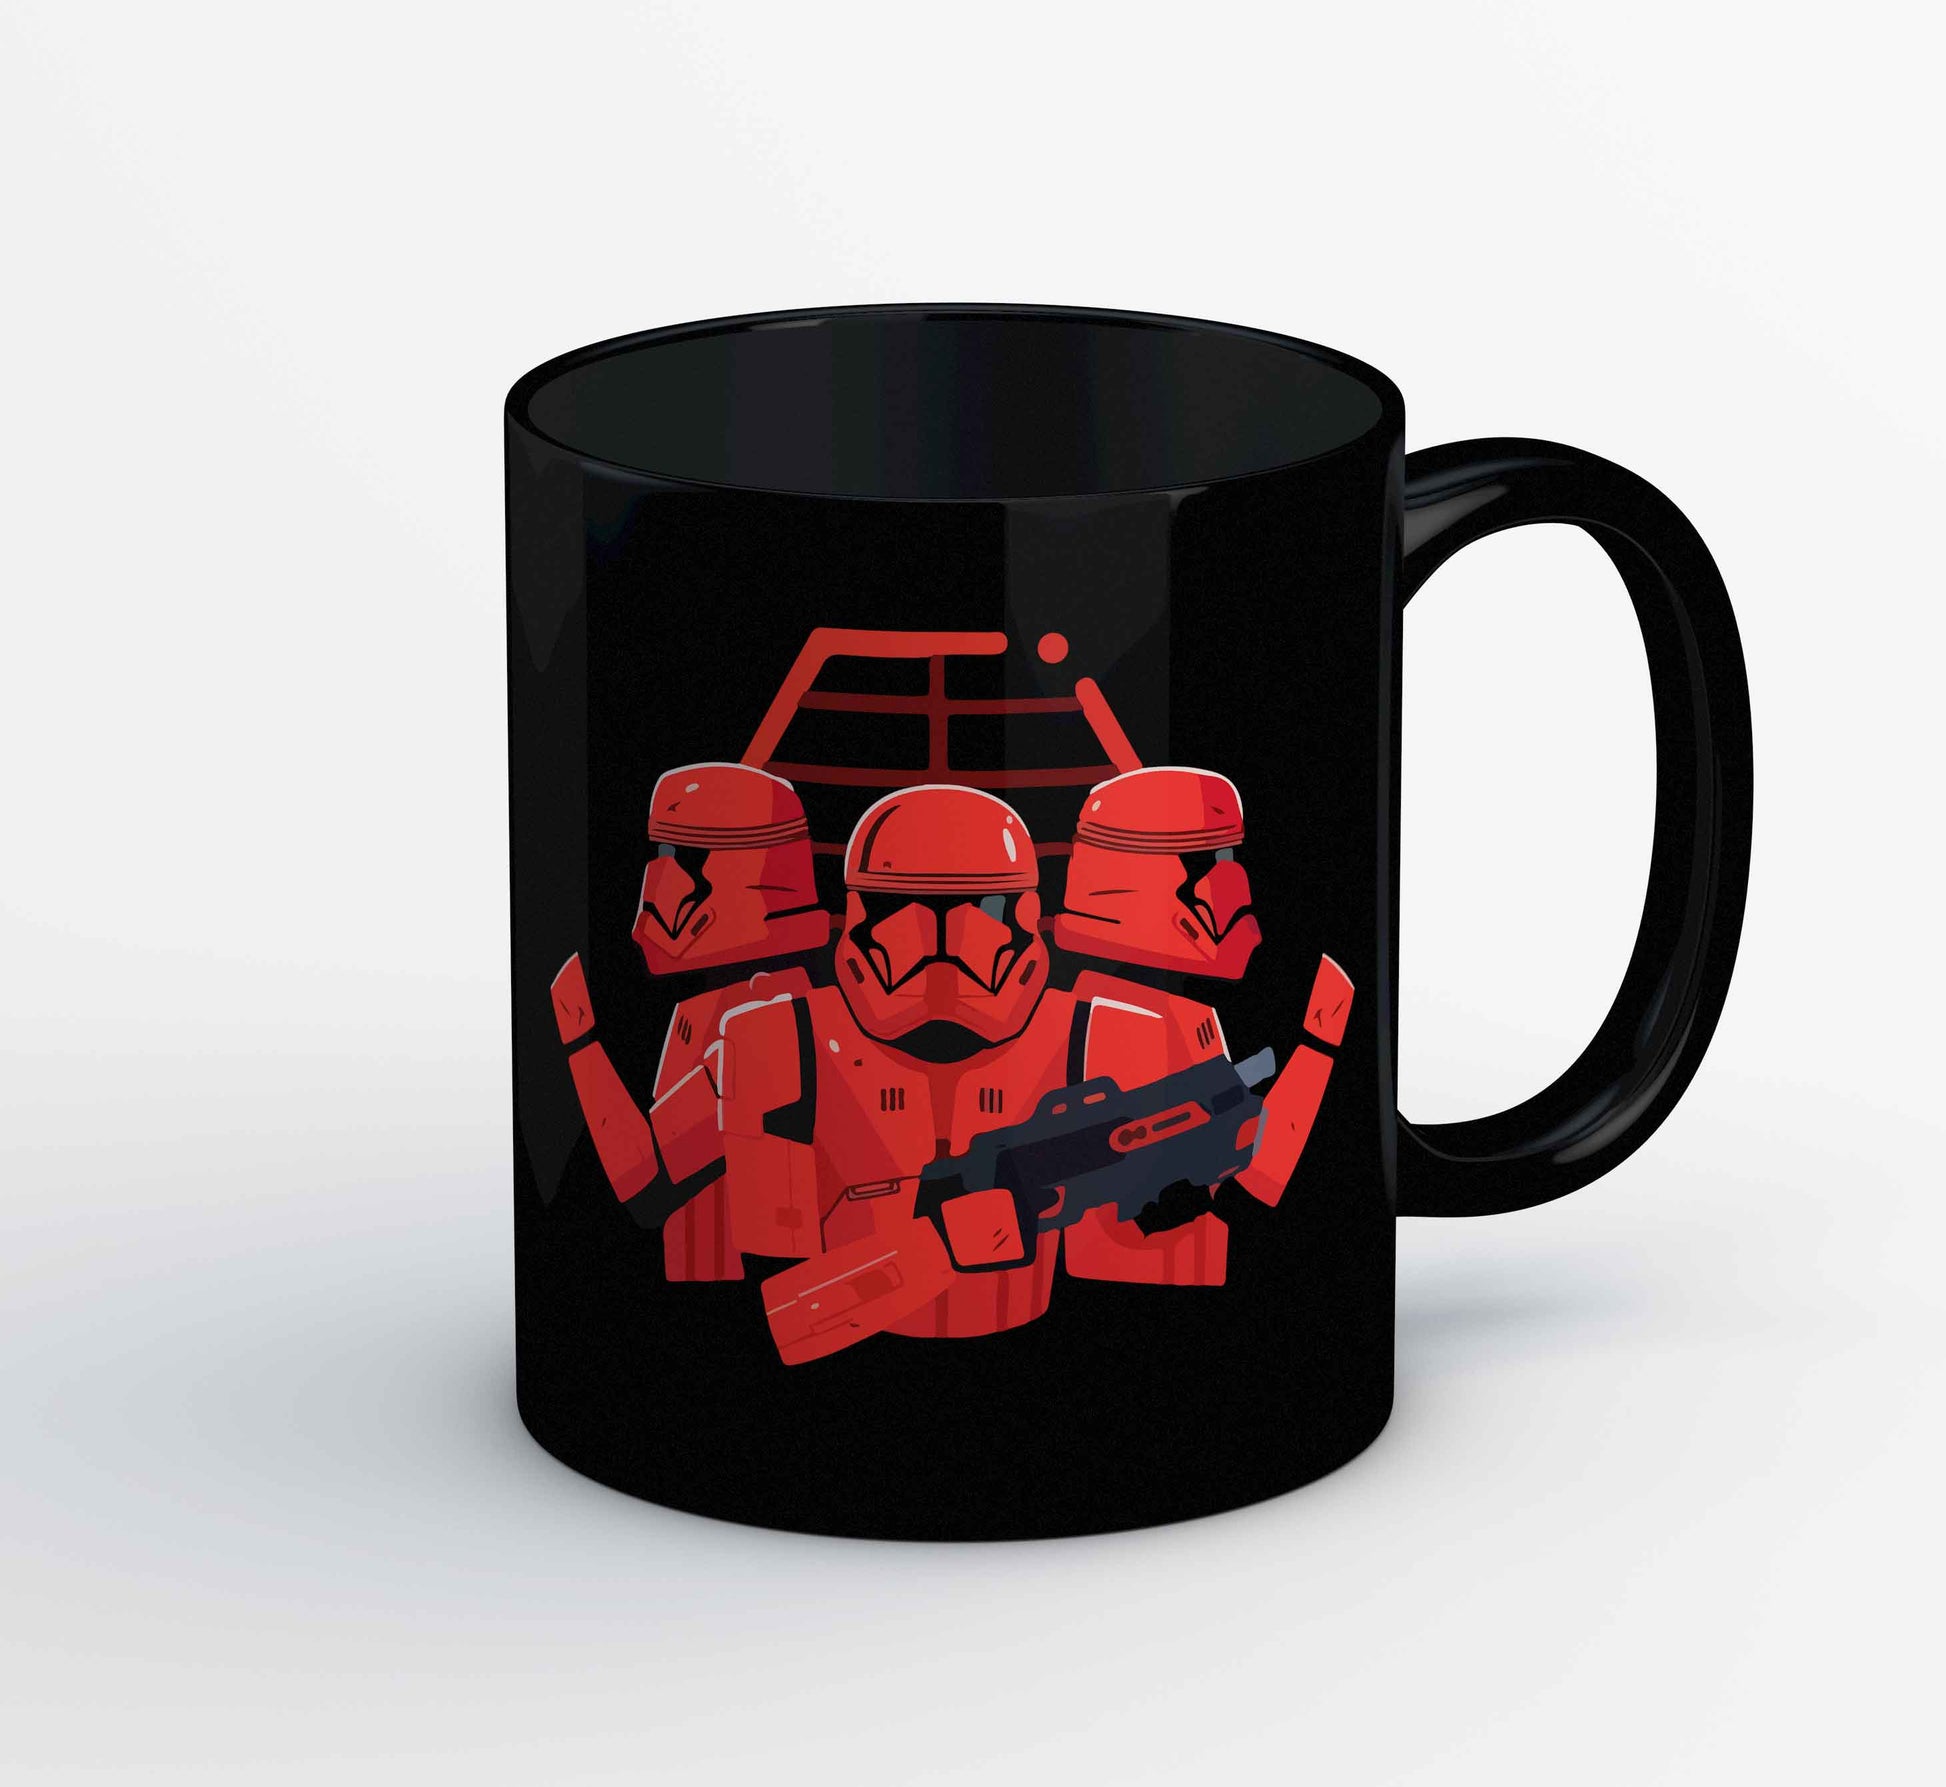 star wars stormtroopers mug coffee ceramic tv & movies buy online india the banyan tee tbt men women girls boys unisex